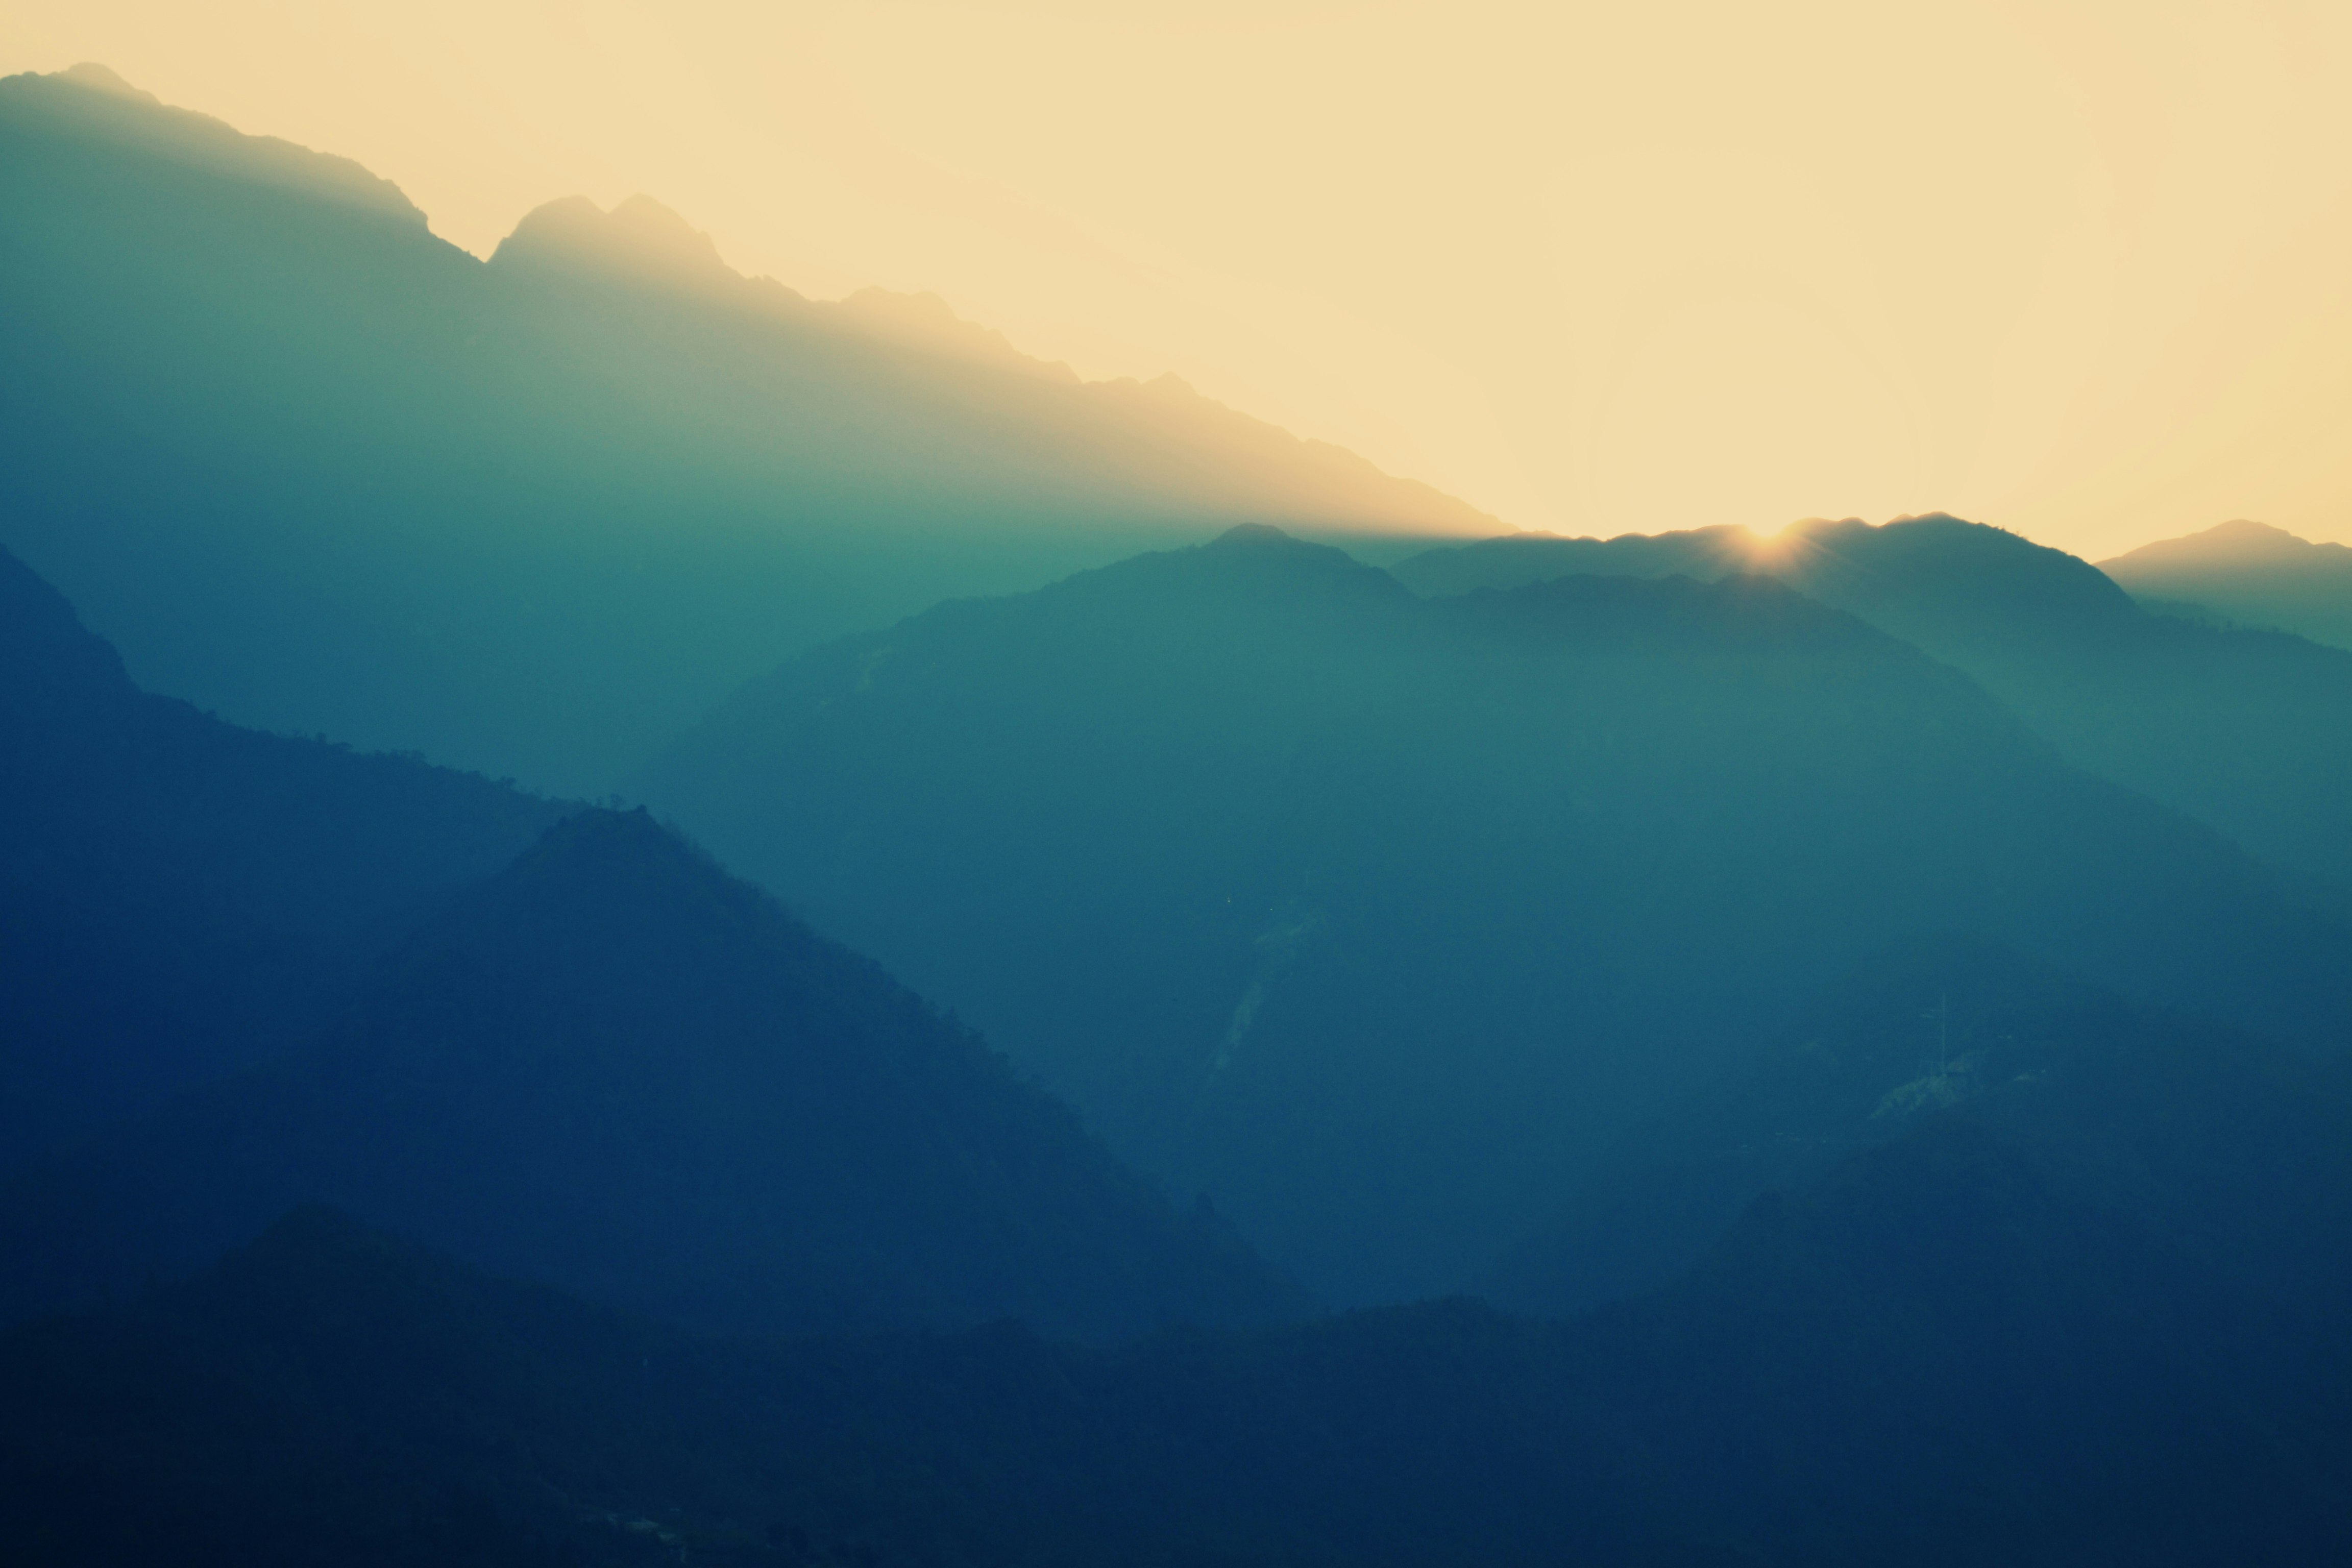 Hazy mountaintops at dusk